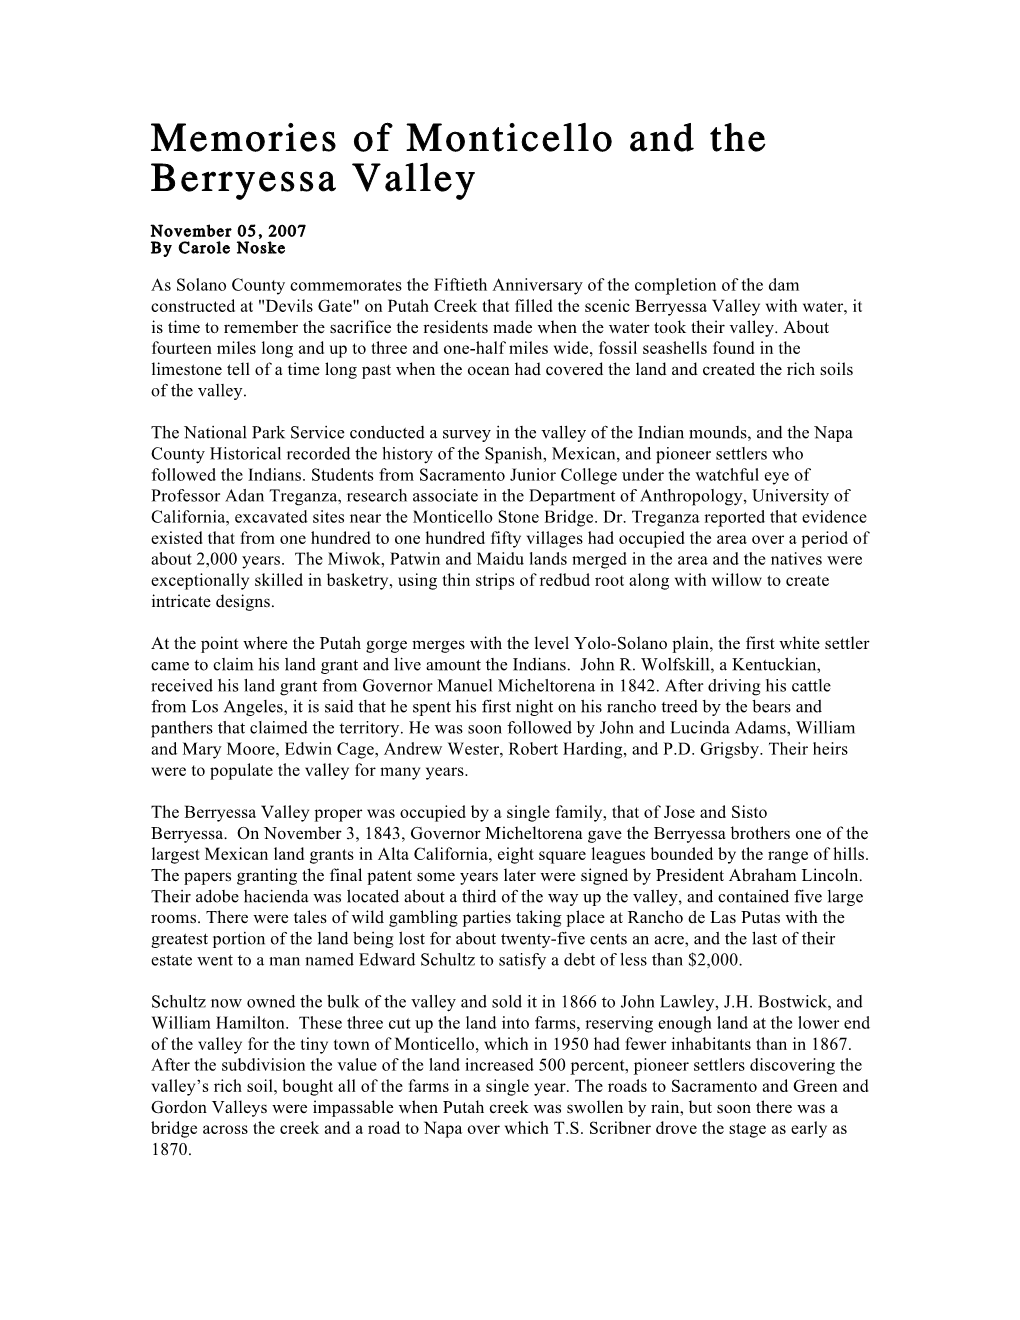 Berryessa History Vacaville Reporter 2007